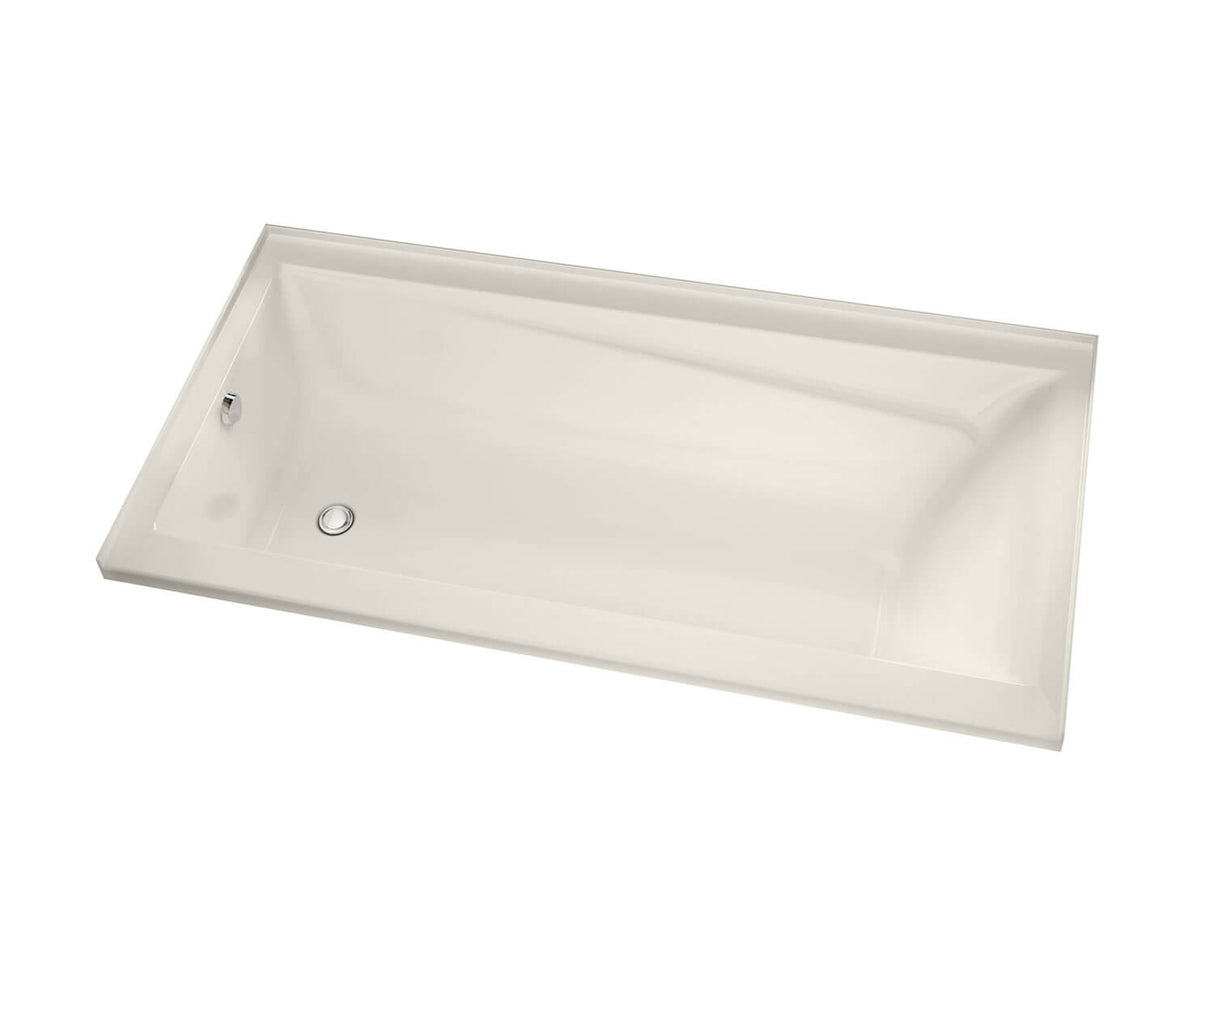 MAAX 105514-103-007-102 Exhibit 6032 IF Acrylic Alcove Left-Hand Drain Aeroeffect Bathtub in Biscuit